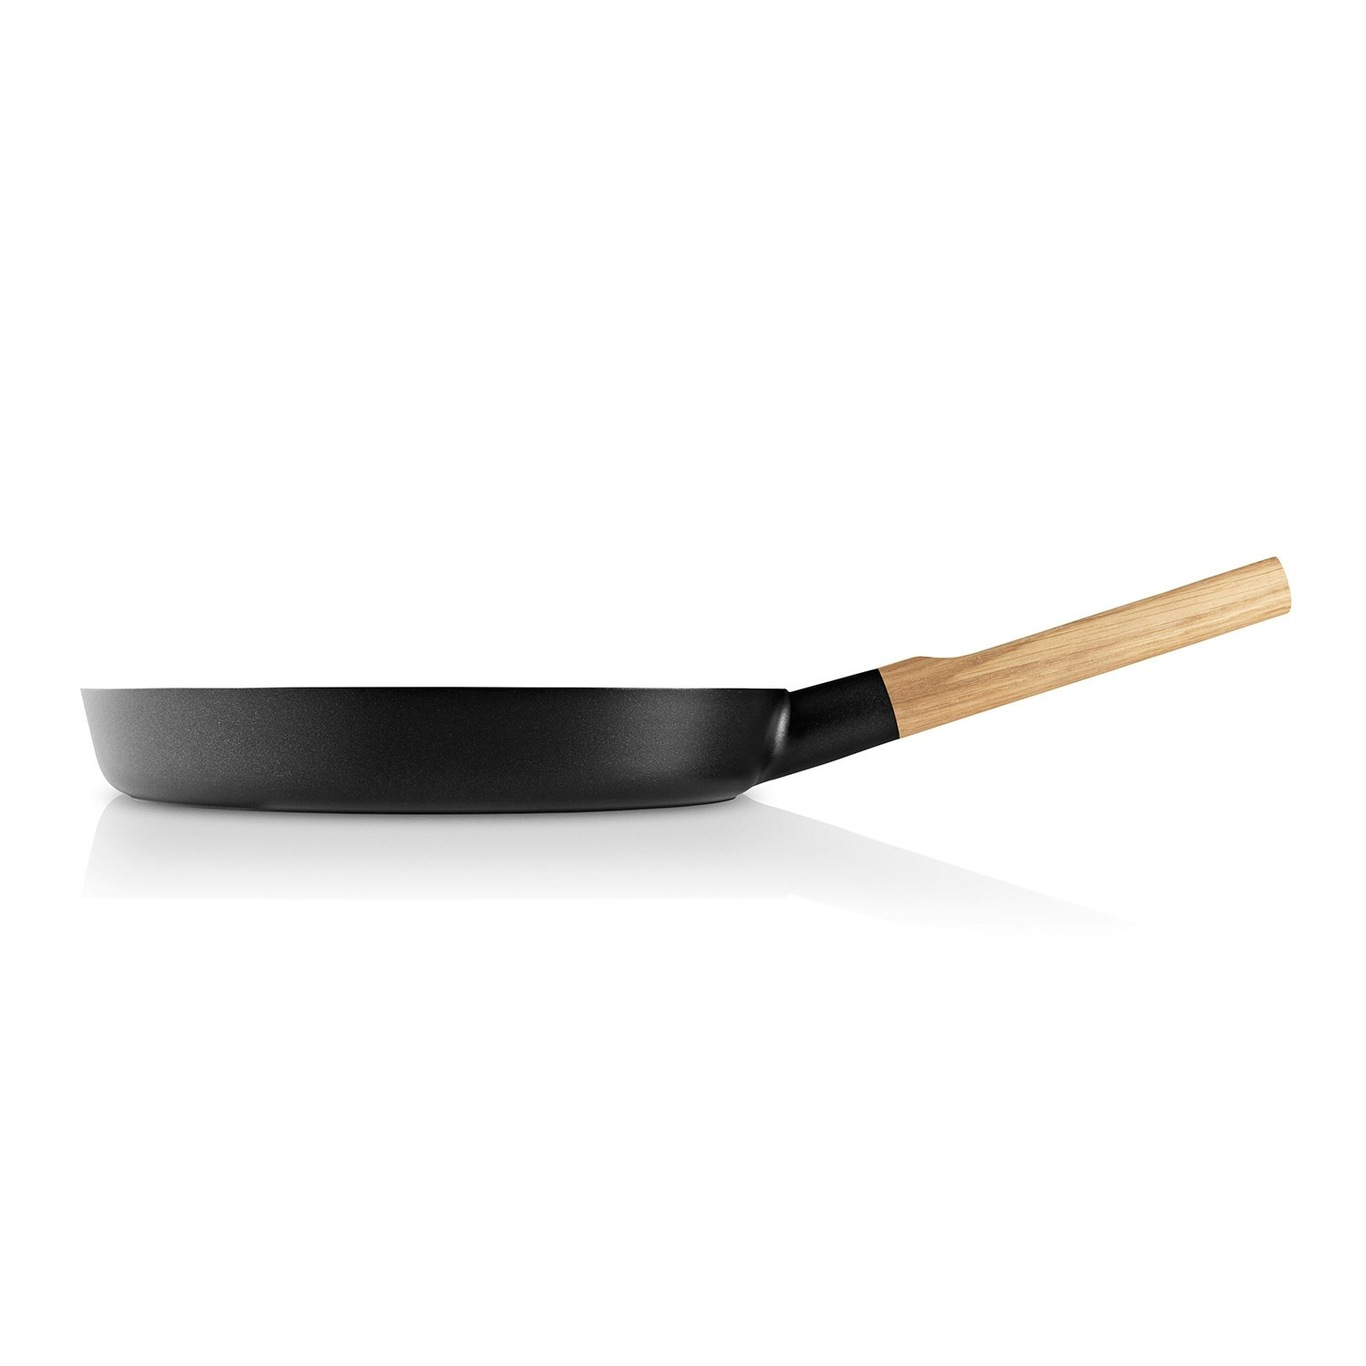 https://royaldesign.com/image/2/eva-solo-nordic-kitchen-grill-frying-pan-0?w=800&quality=80